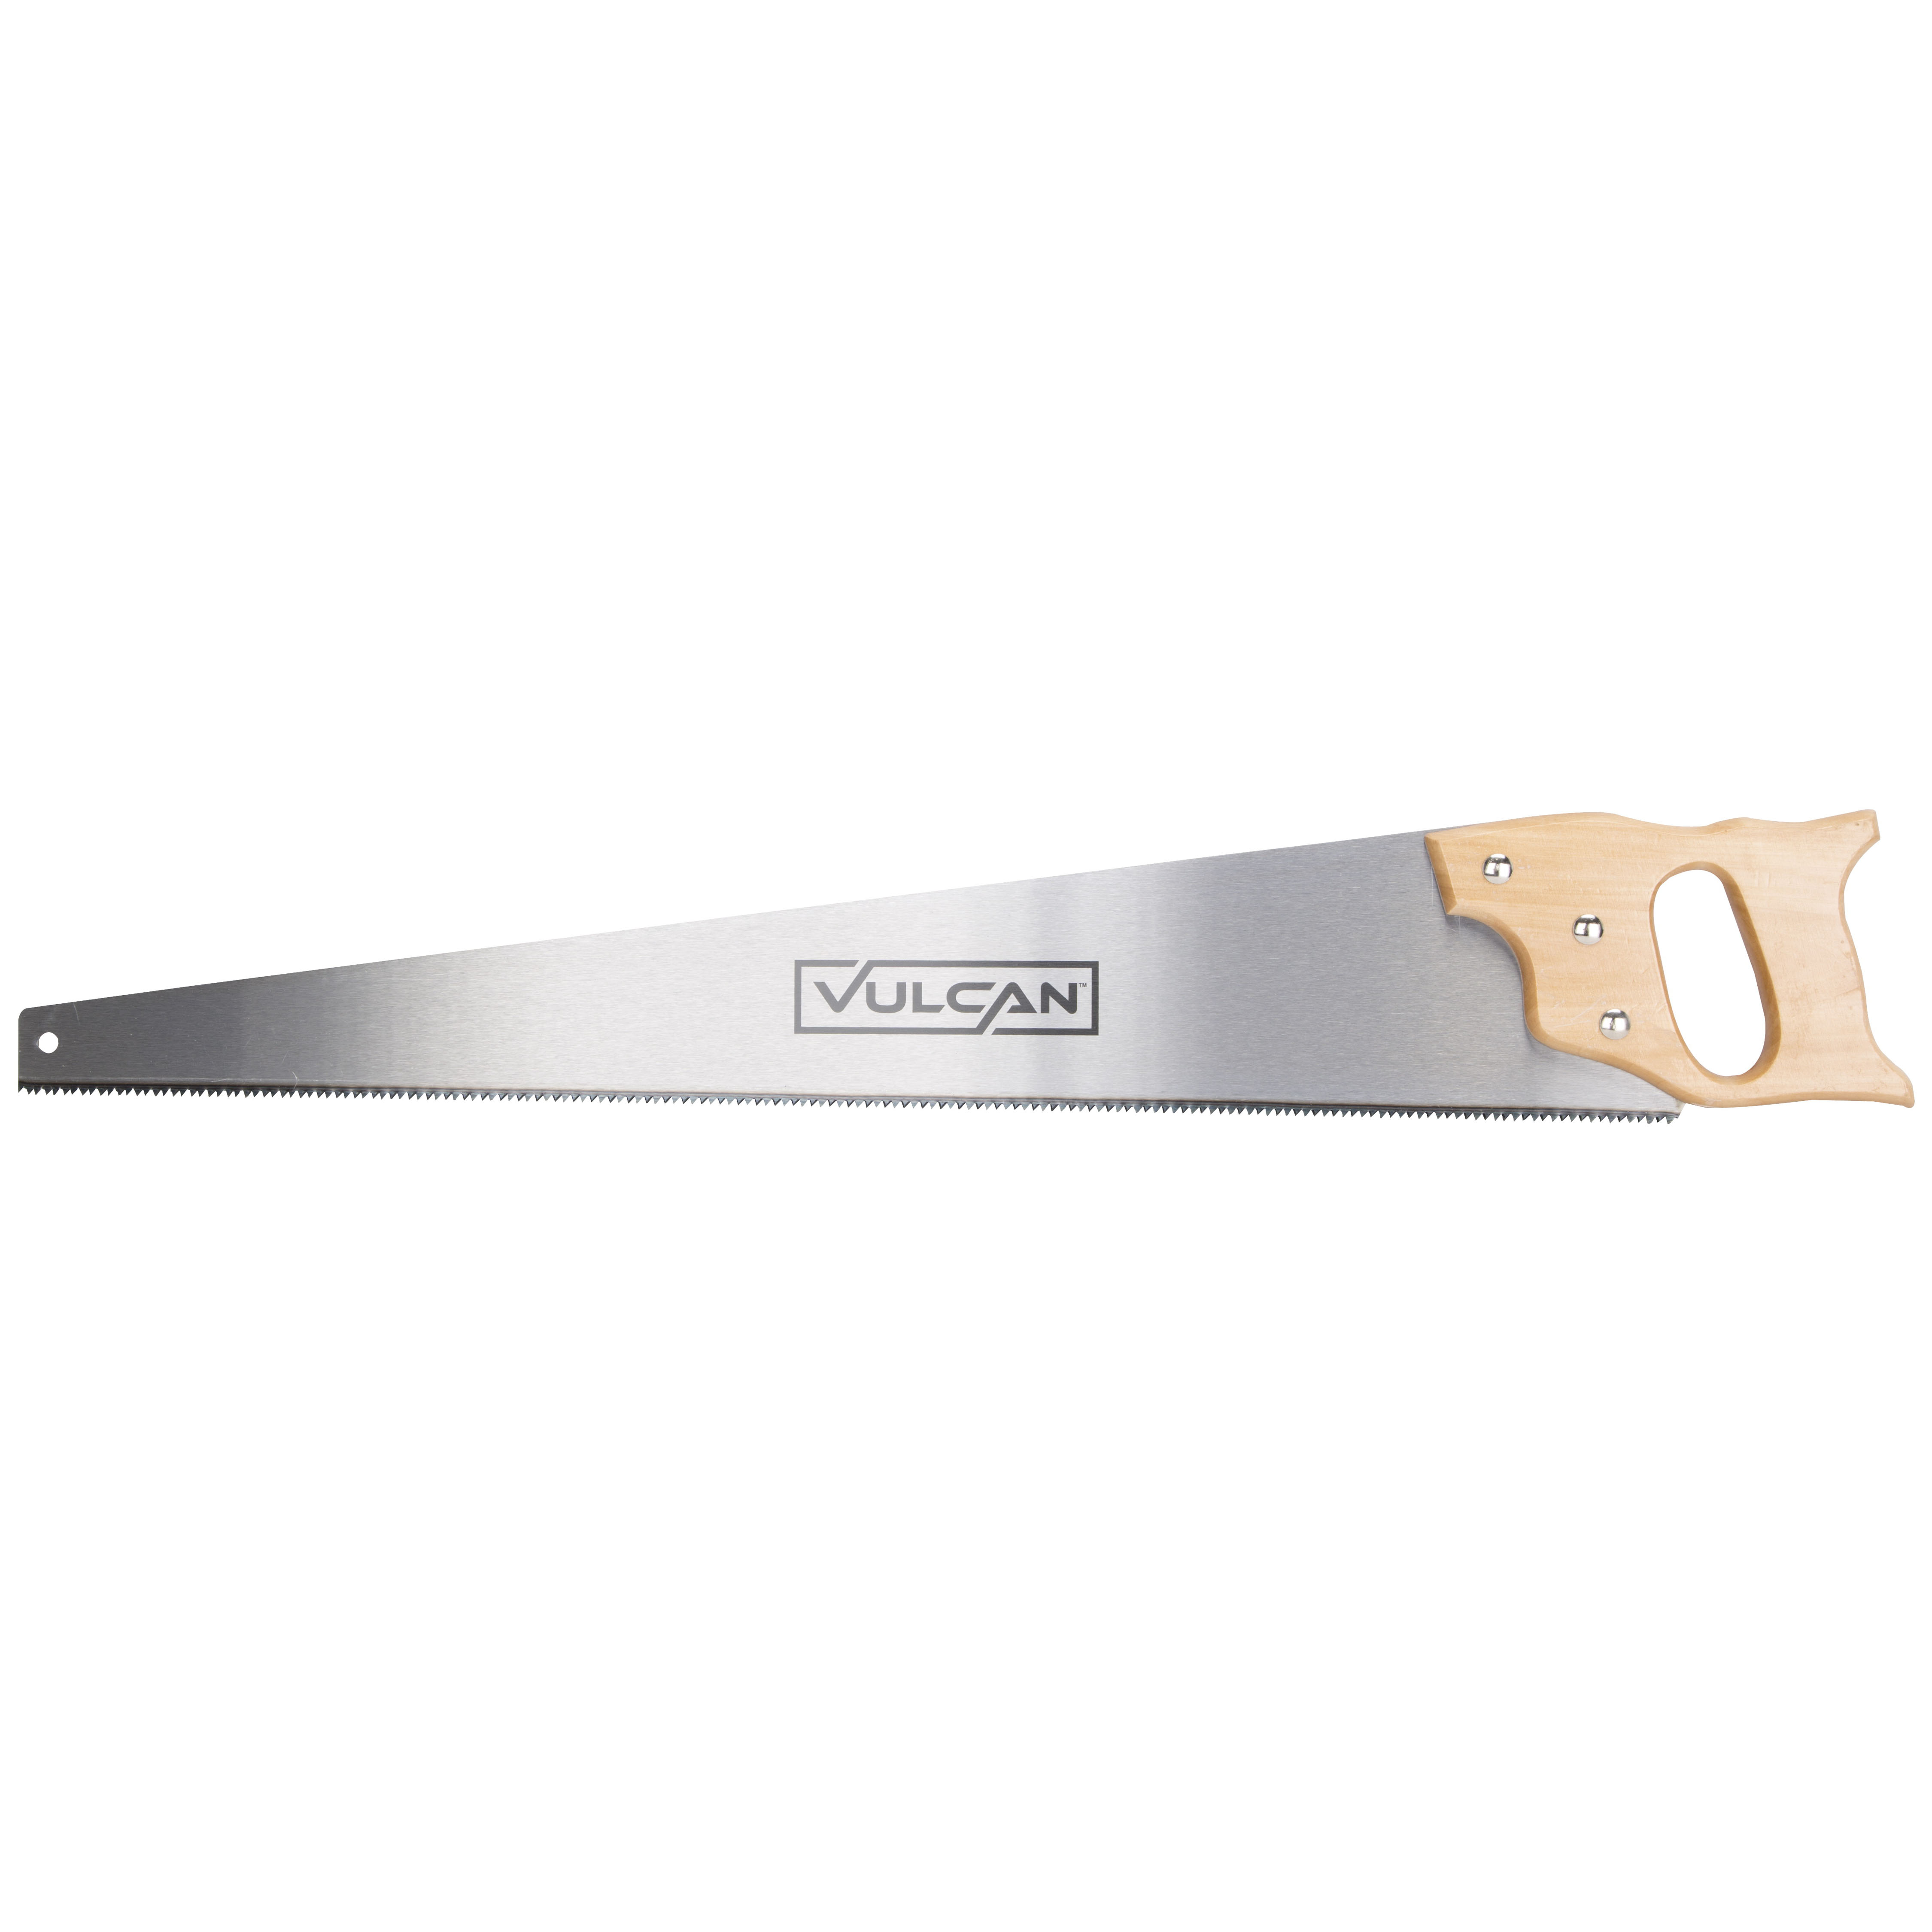 JLO-043 Handsaw, 26 in L Blade, 8 TPI TPI, Steel Blade, Wood Handle, Wood Handle